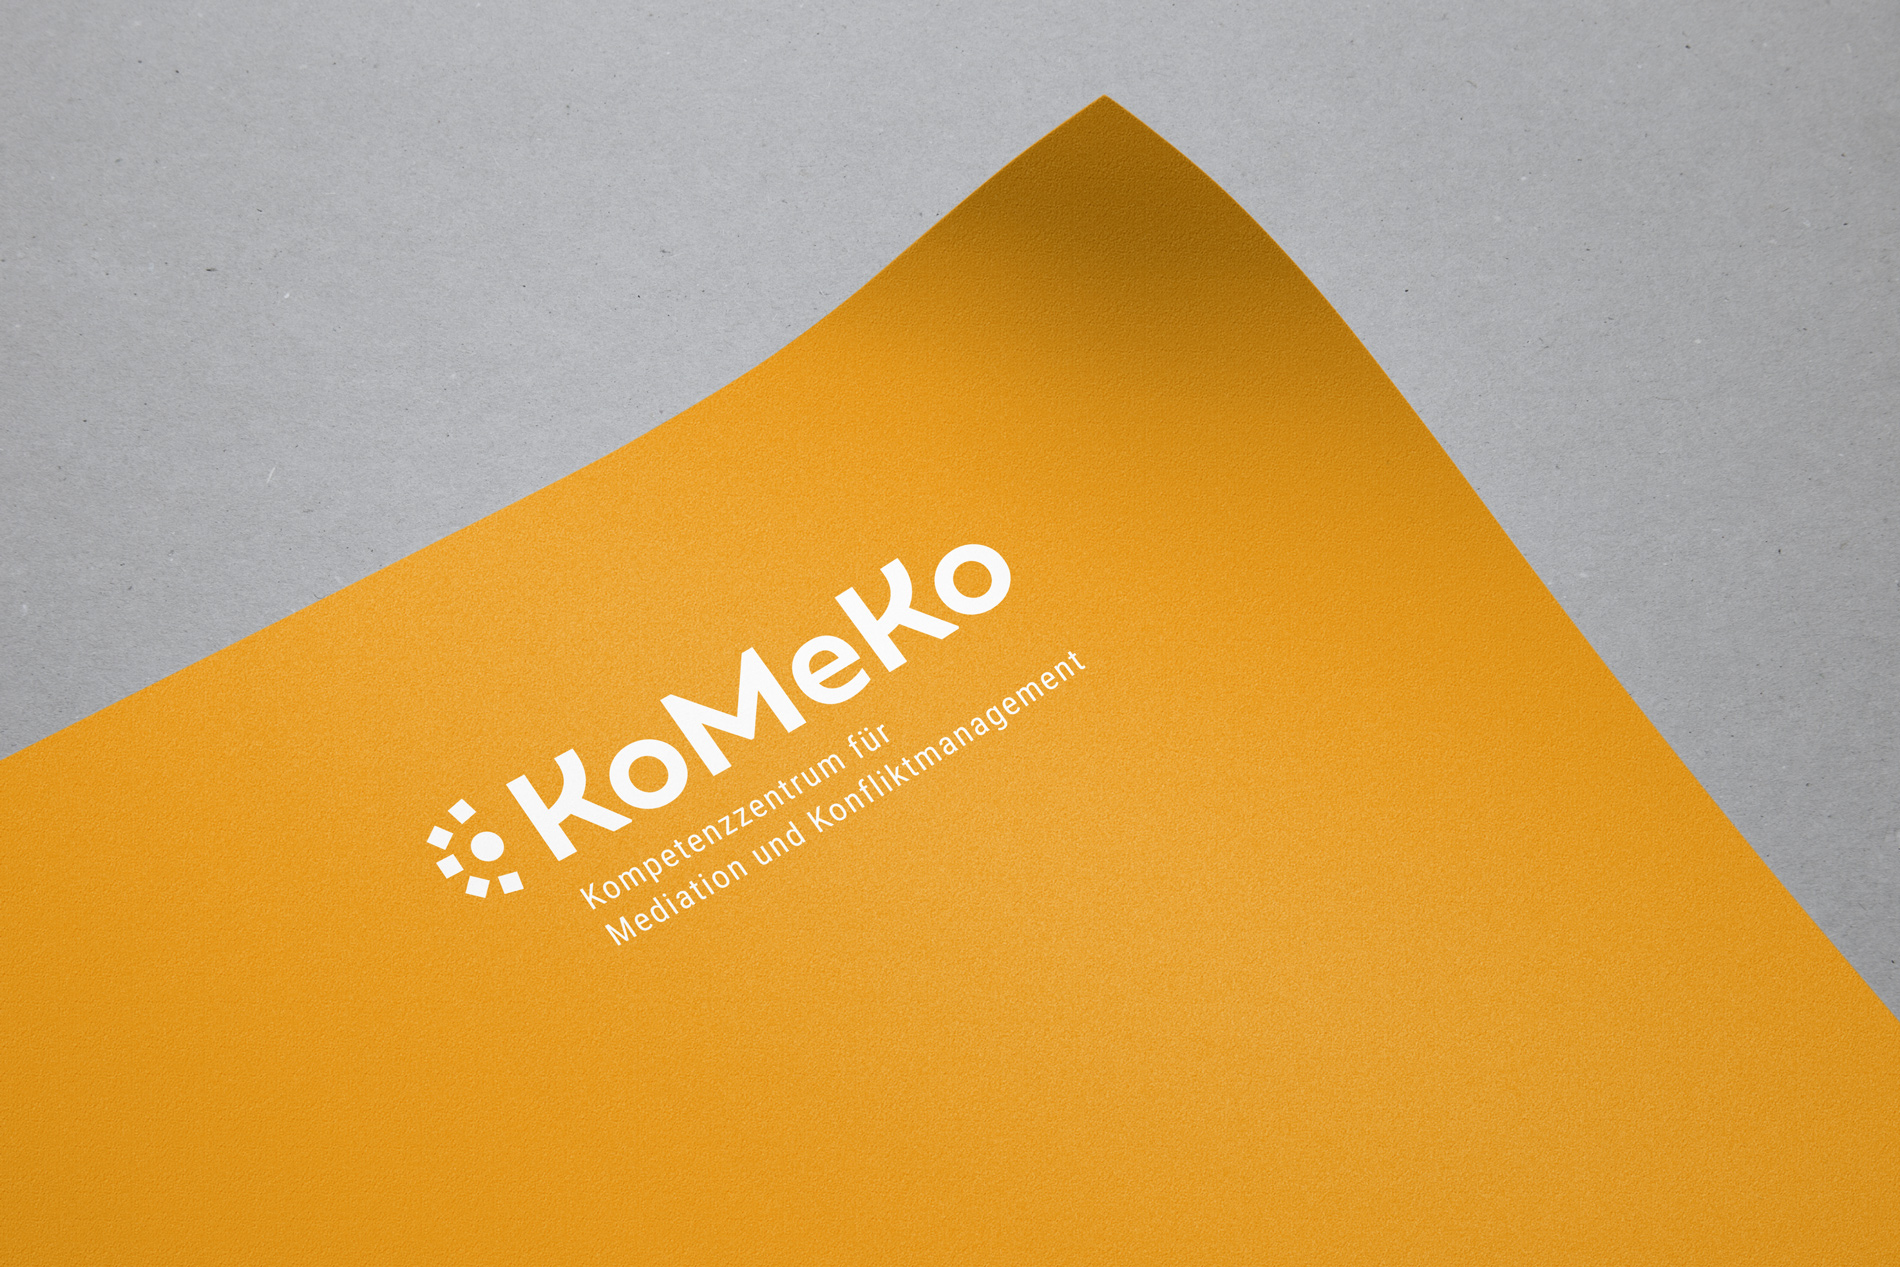 Logodesign KoMeKo